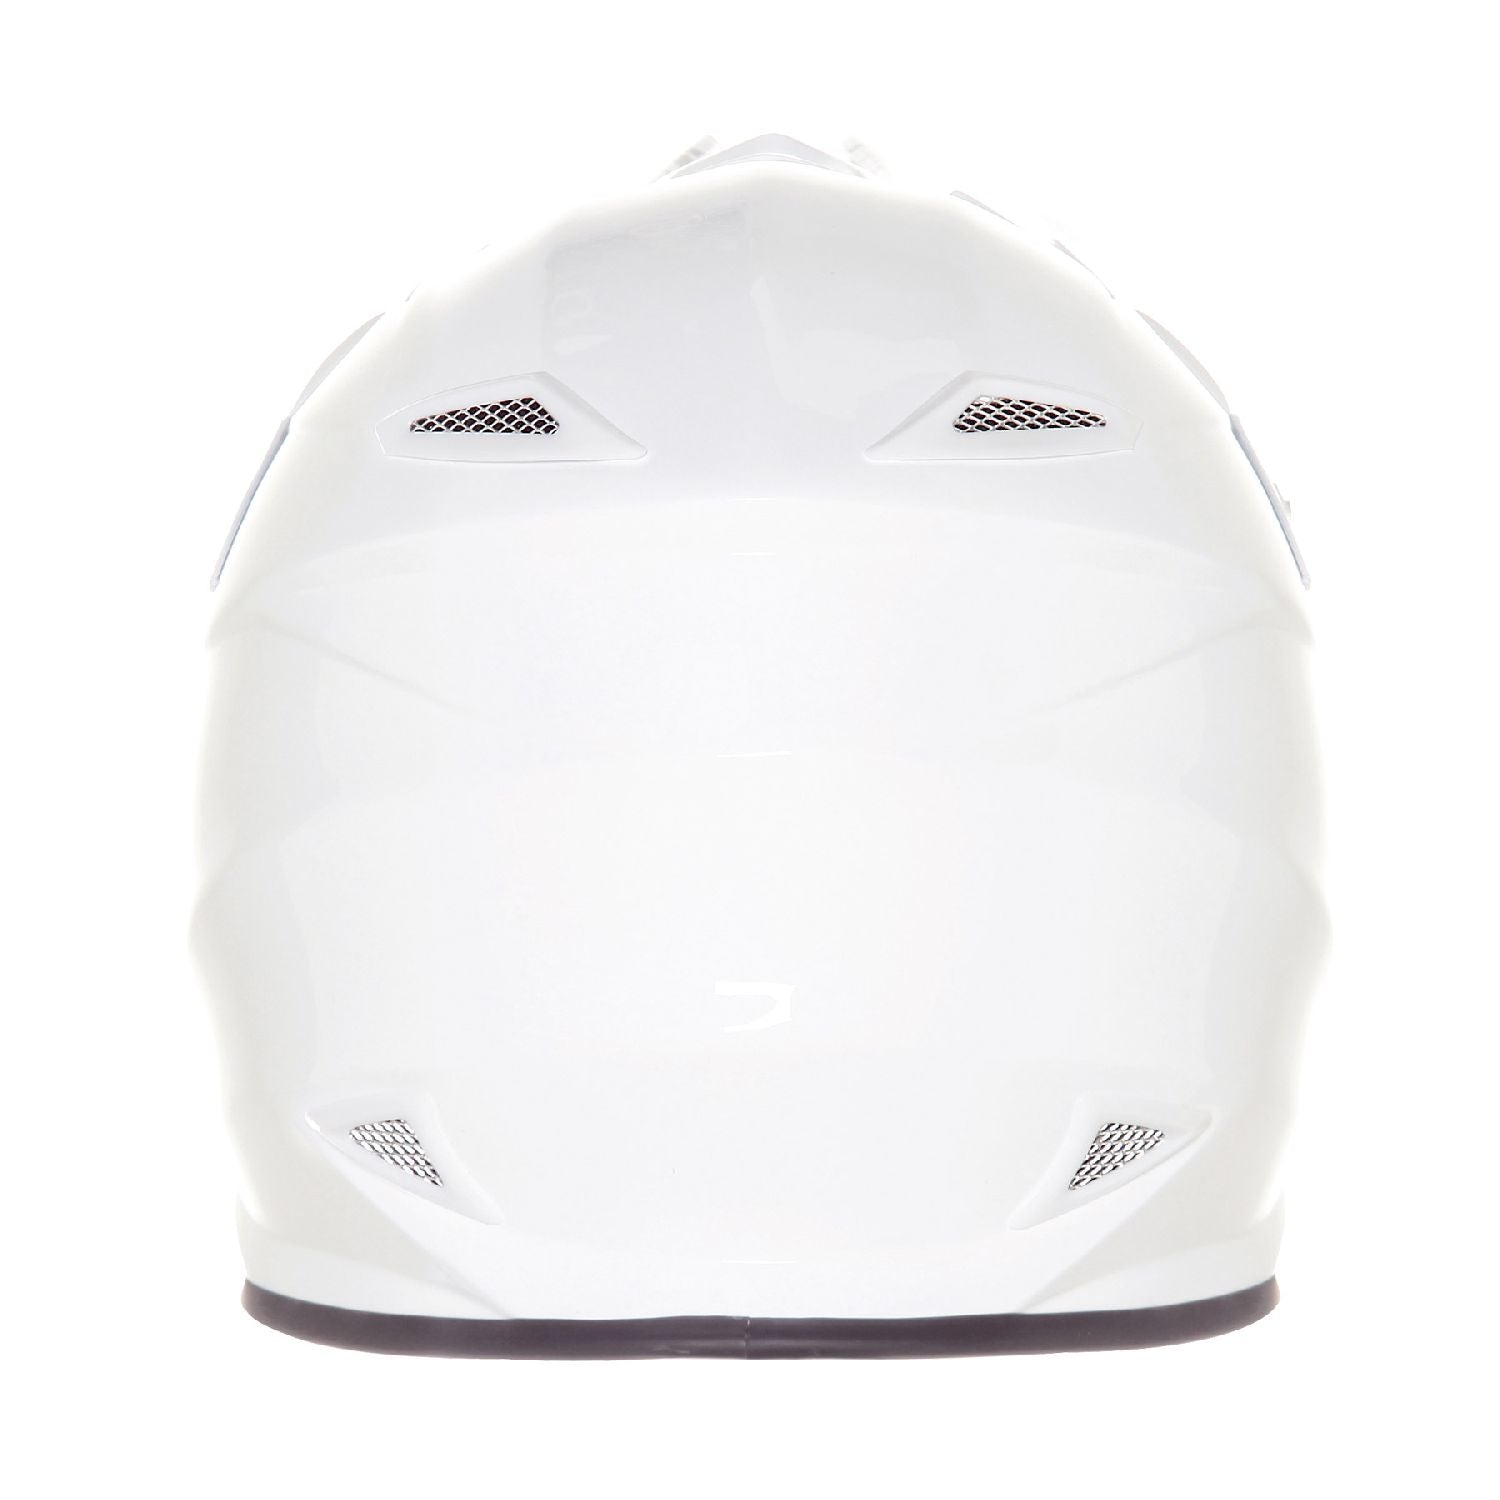 Suomy MX Jump Solid Off Road Motorcycle Helmet (XS - 2XL)